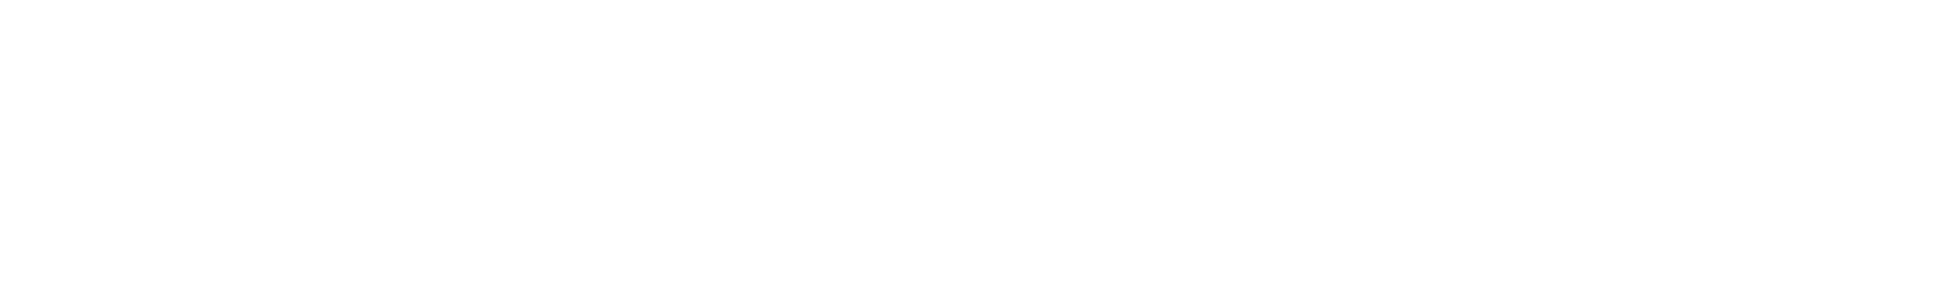 wireless social logo